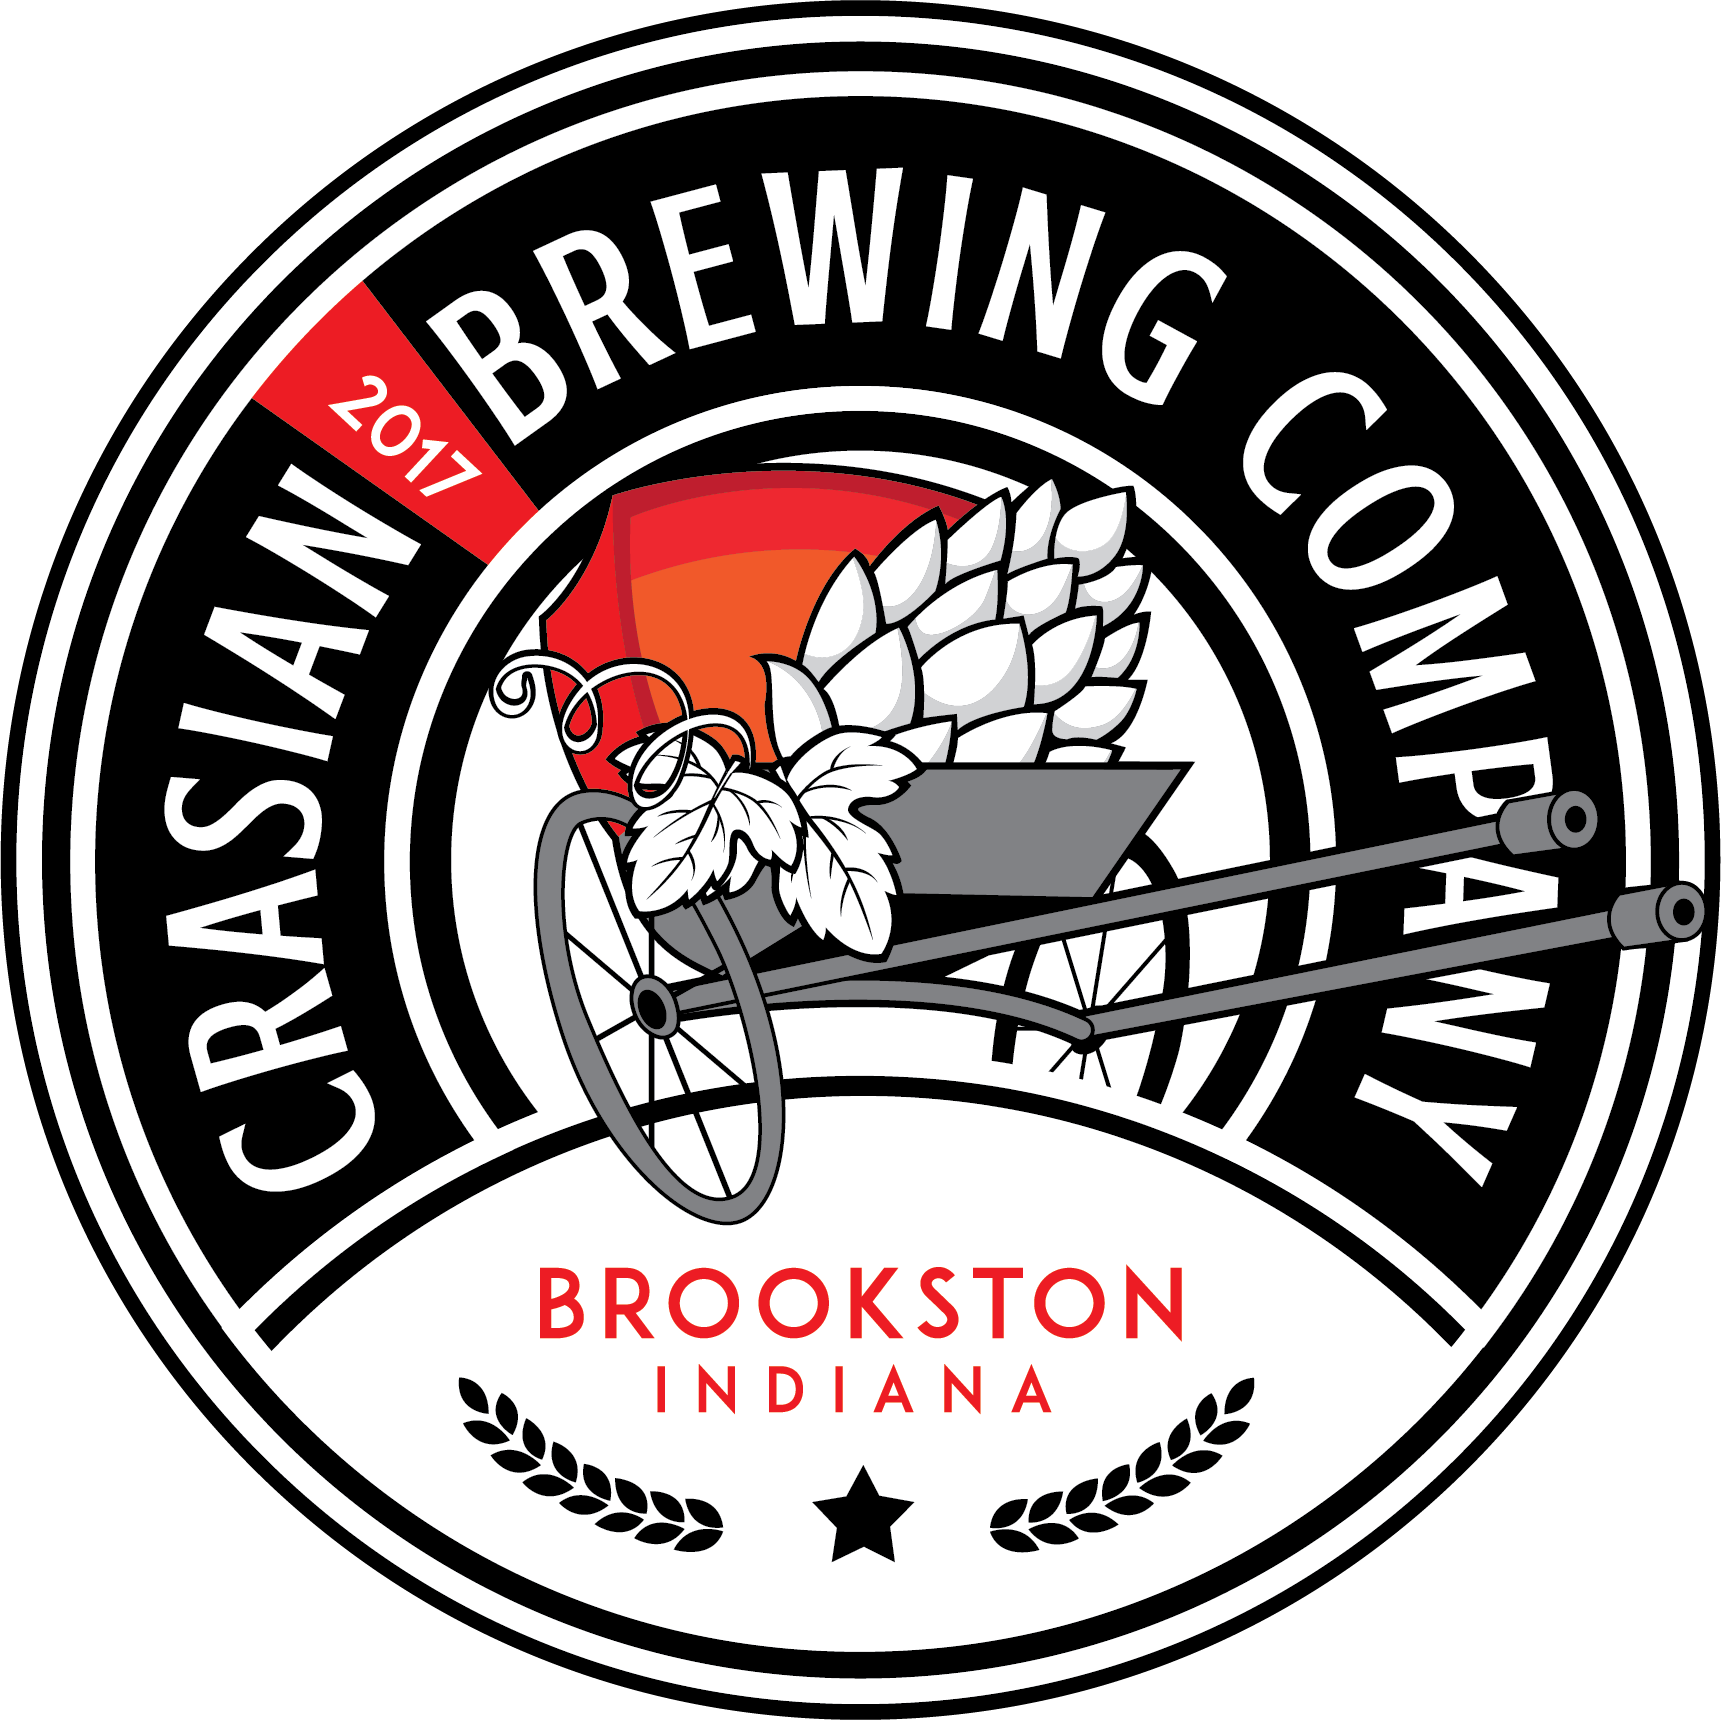 Crasian Brewing Company